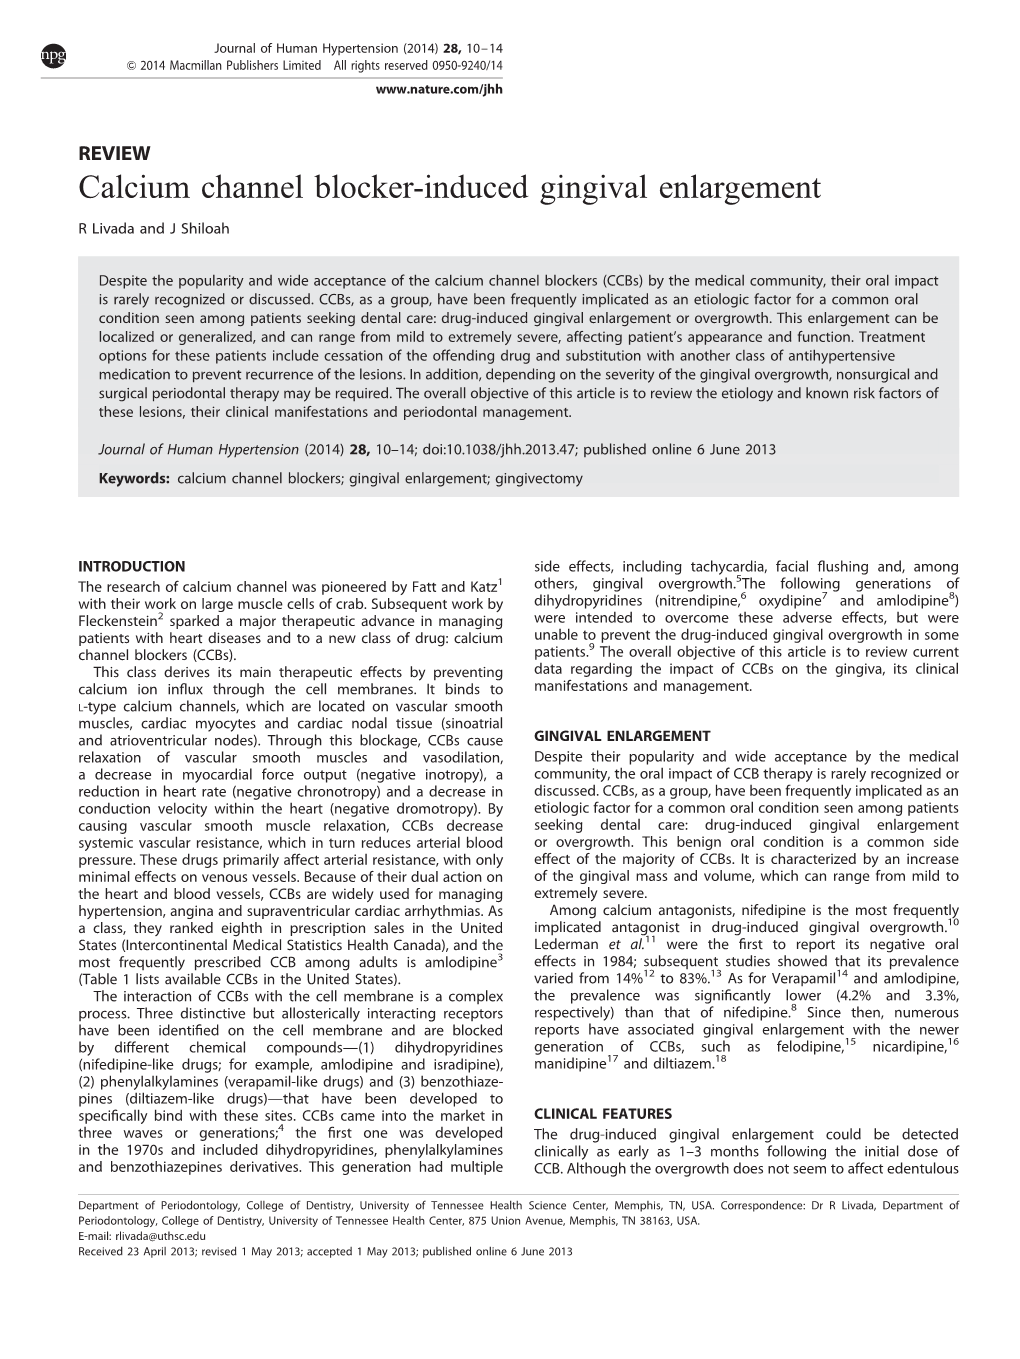 Calcium Channel Blocker-Induced Gingival Enlargement